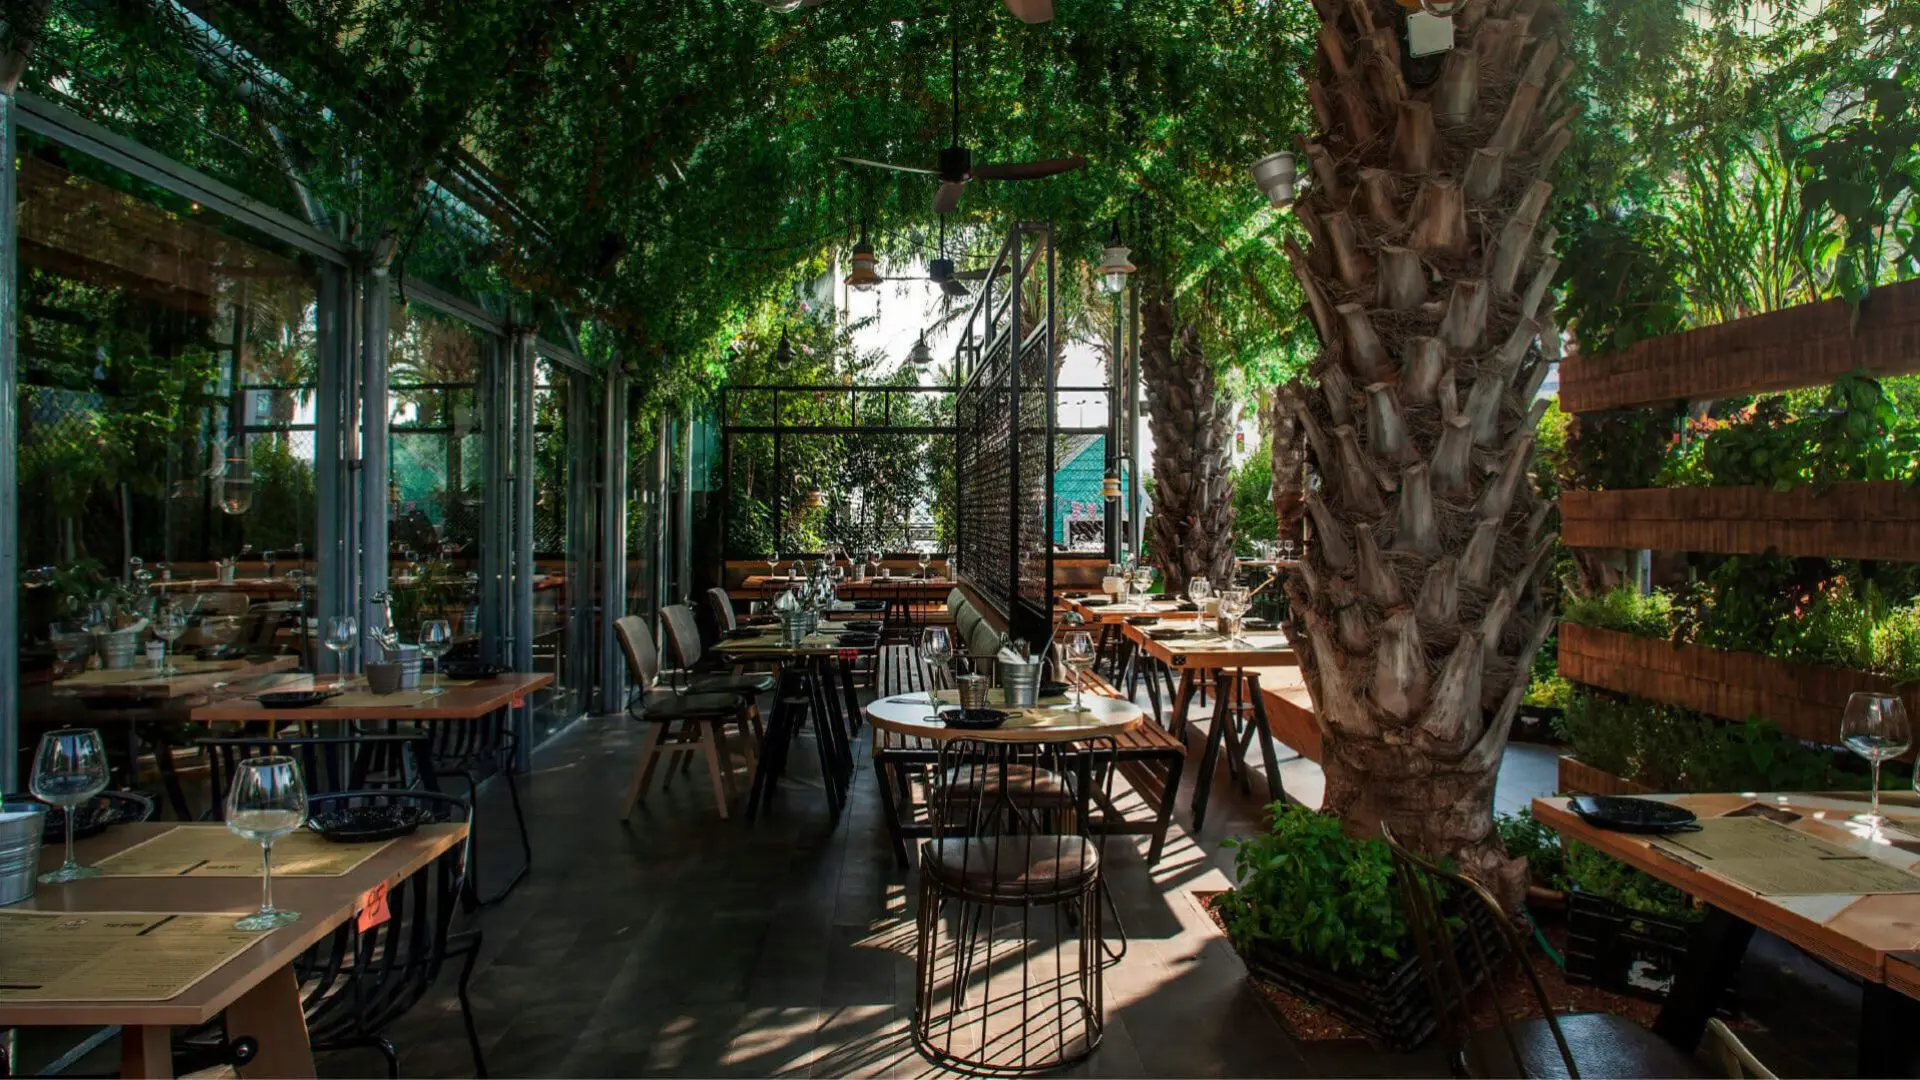 Segev Kitchen Garden – Sharonim _ Israel - 7 plant-filled restaurants - cover